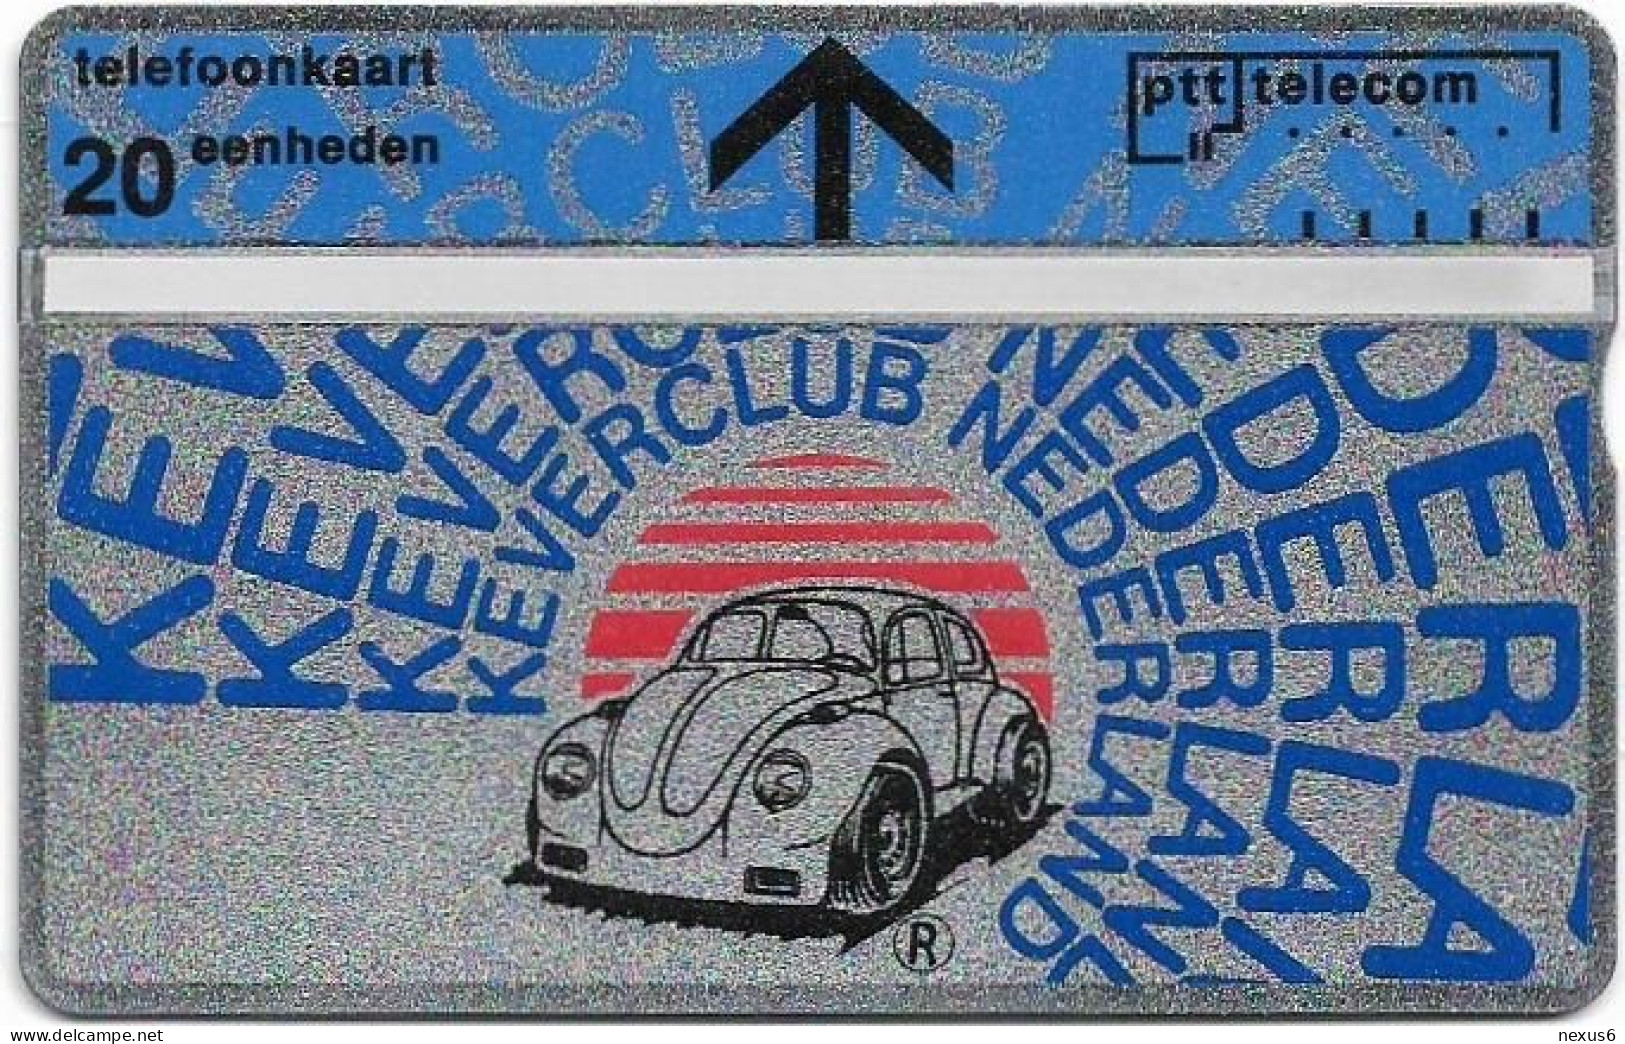 Netherlands - KPN - L&G - R041 - Volkswagen Beetle Keverclub Nederland - 302L - 02.1993, 20Units, 5.000ex, Mint - Privat